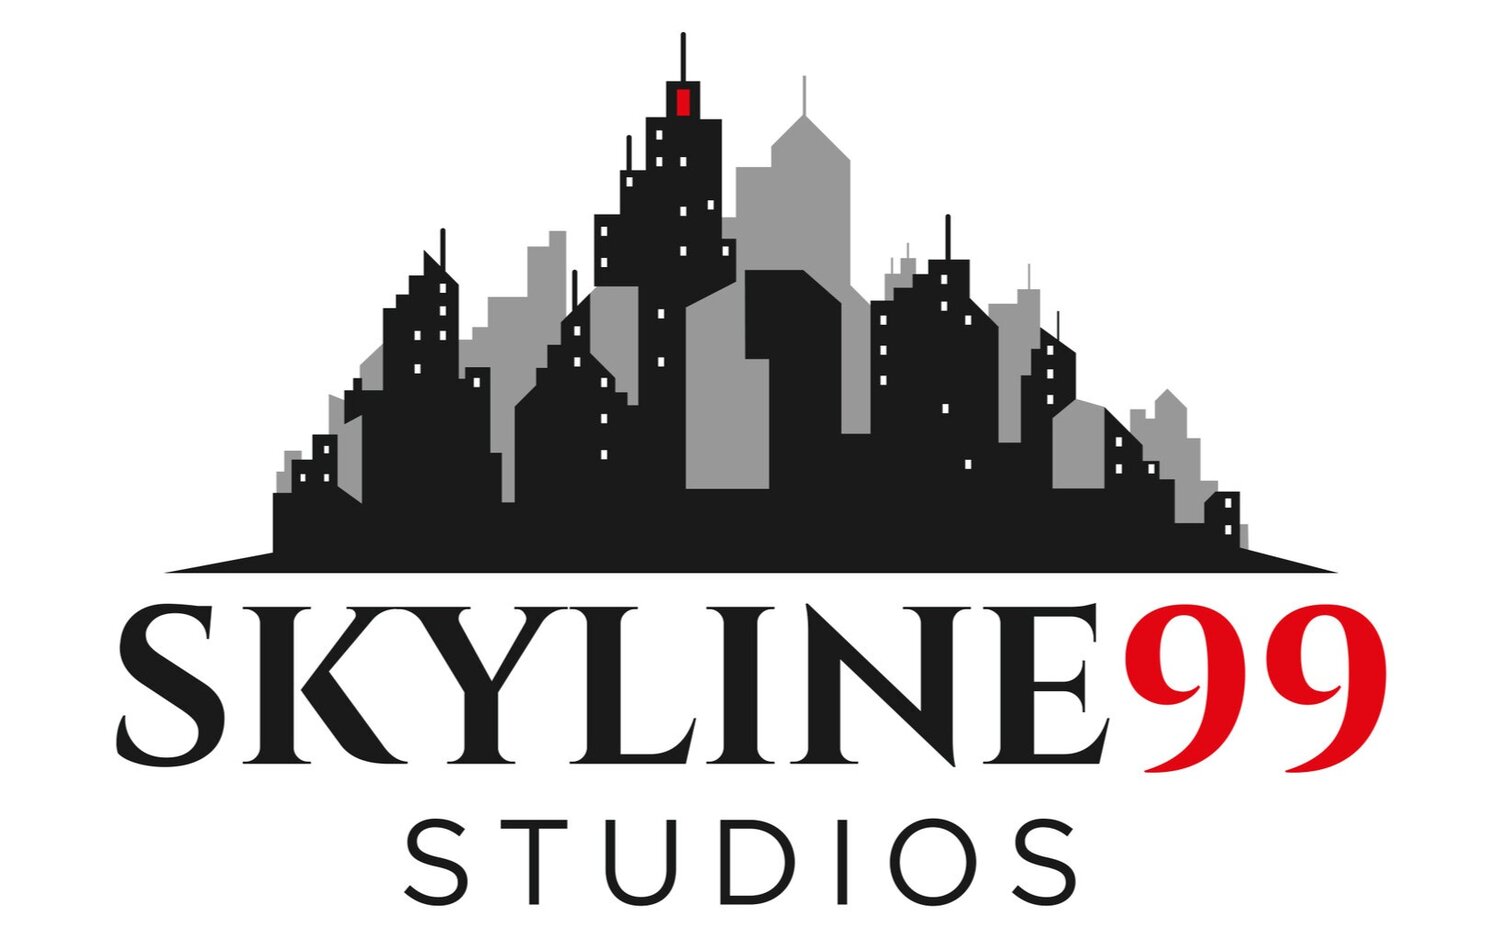 Skyline99 Studios